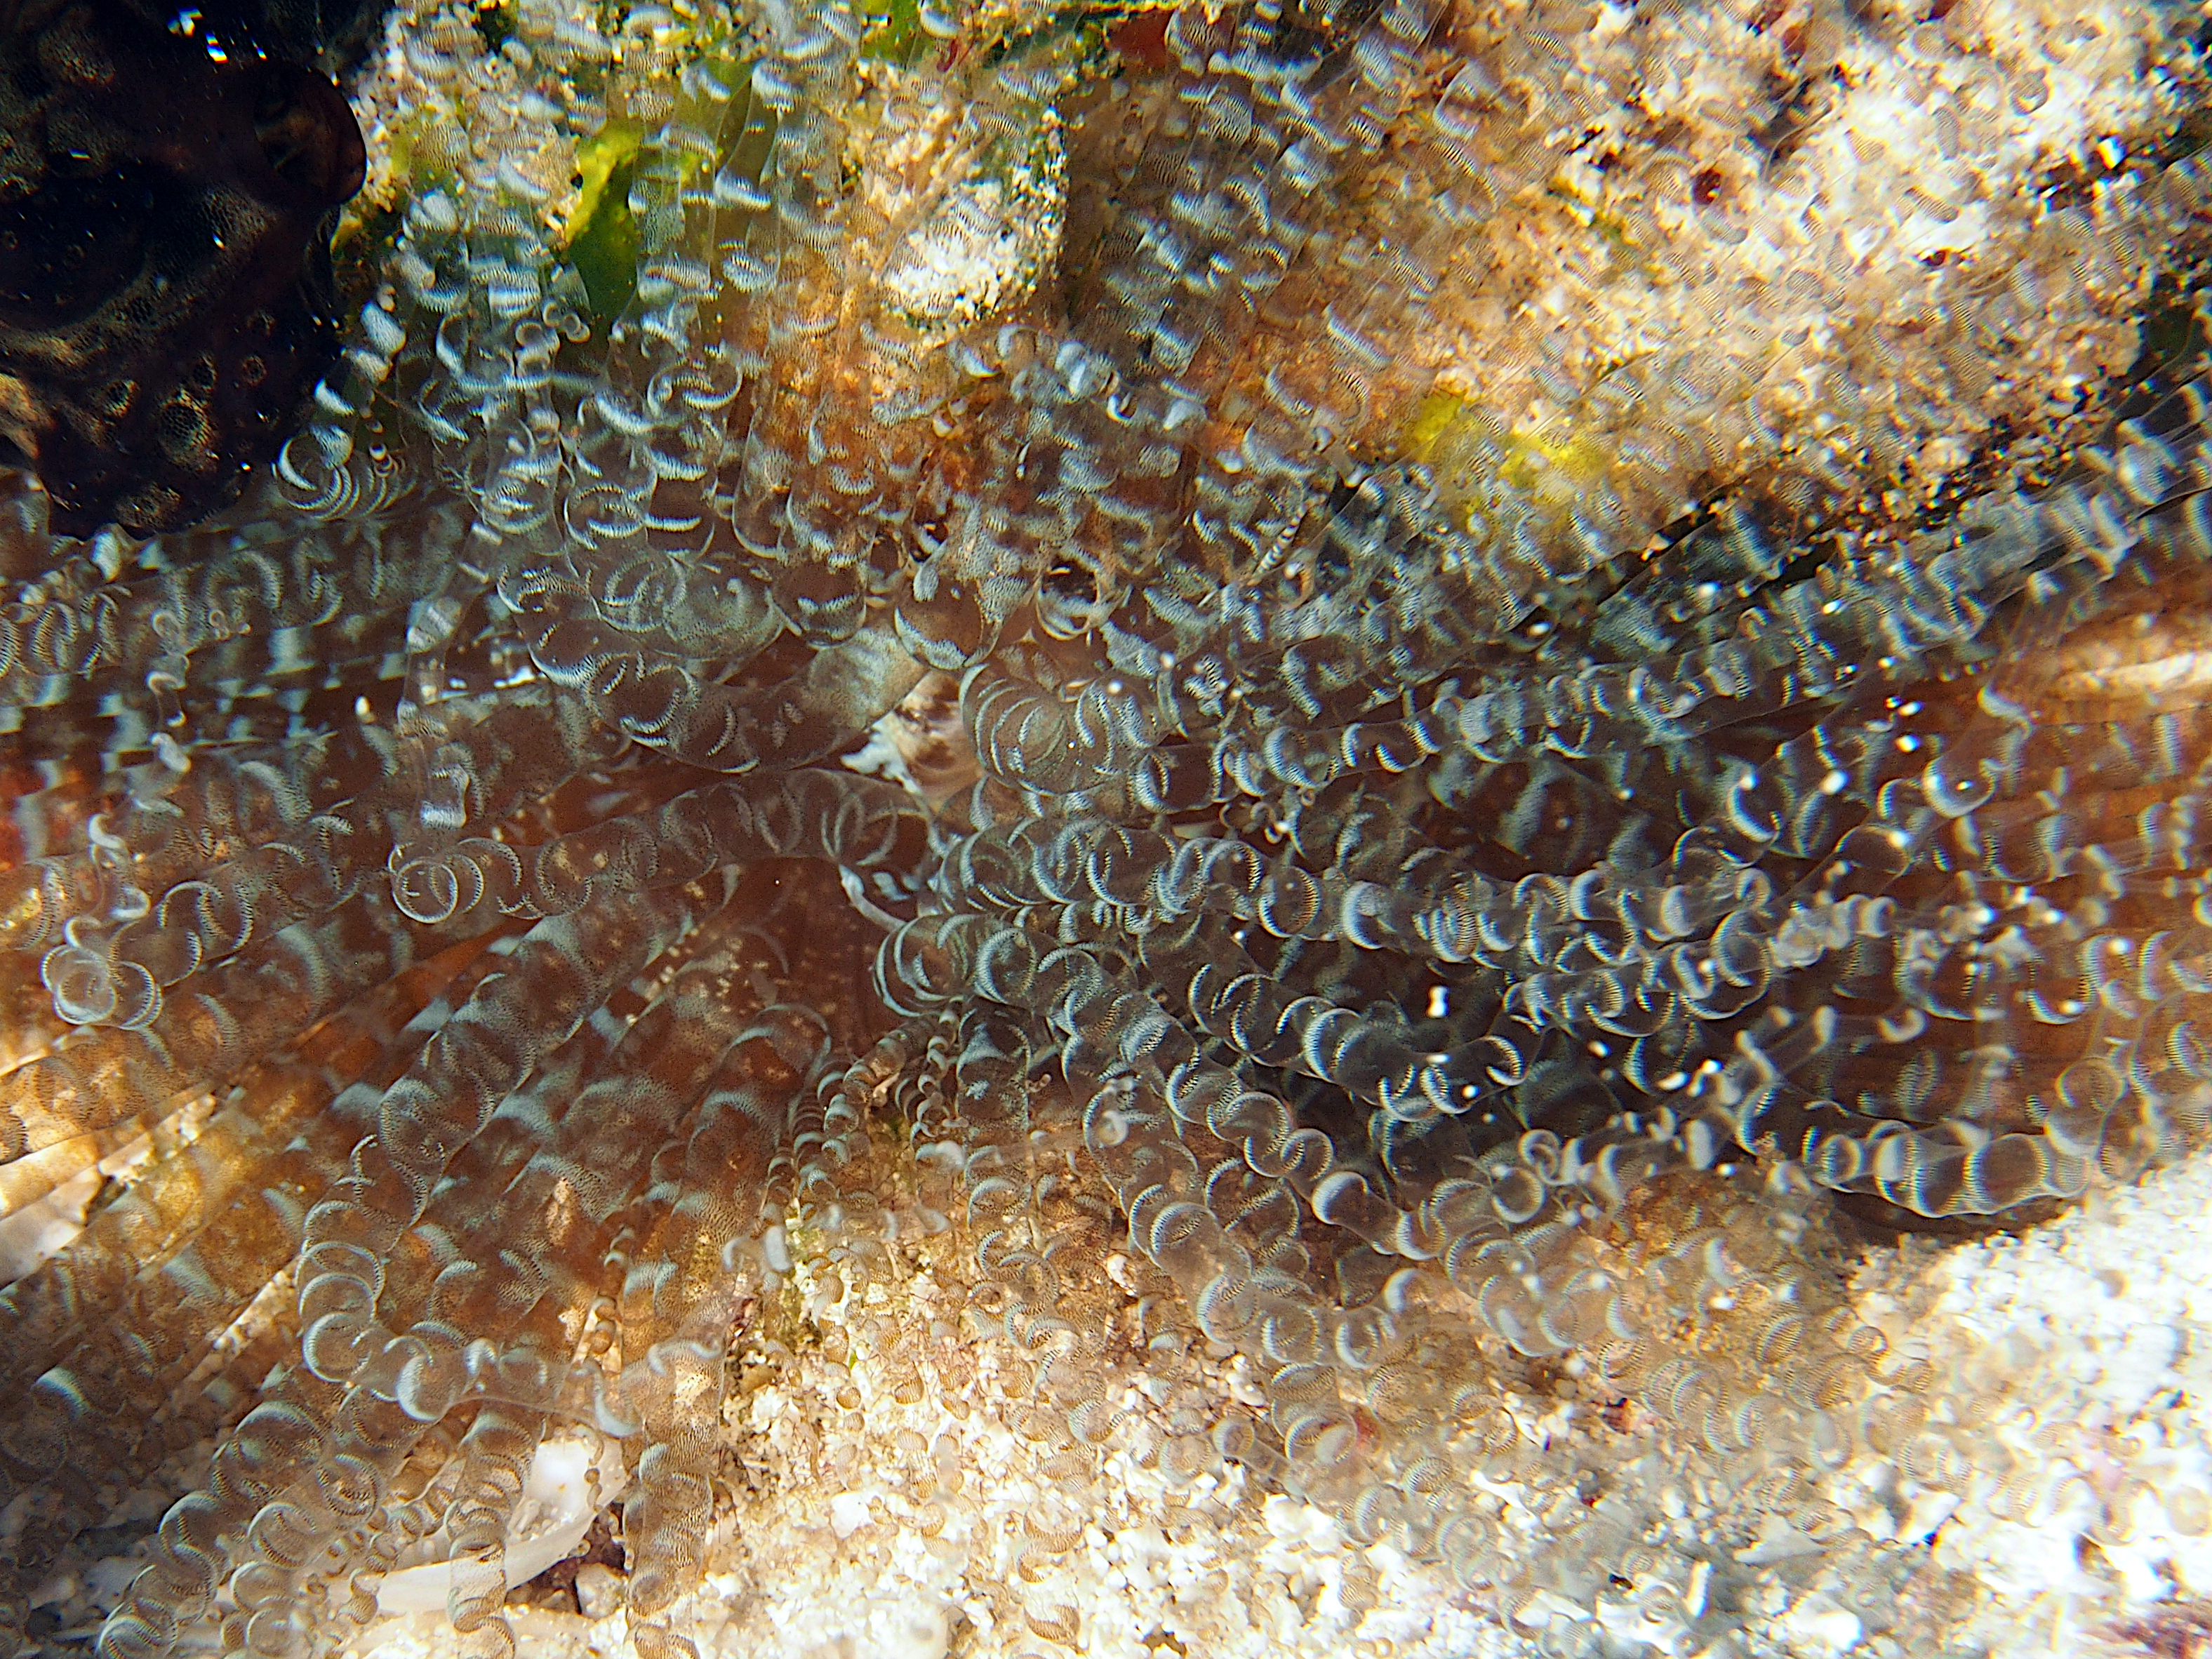 Corkscrew Anemone - Bartholomea annulata